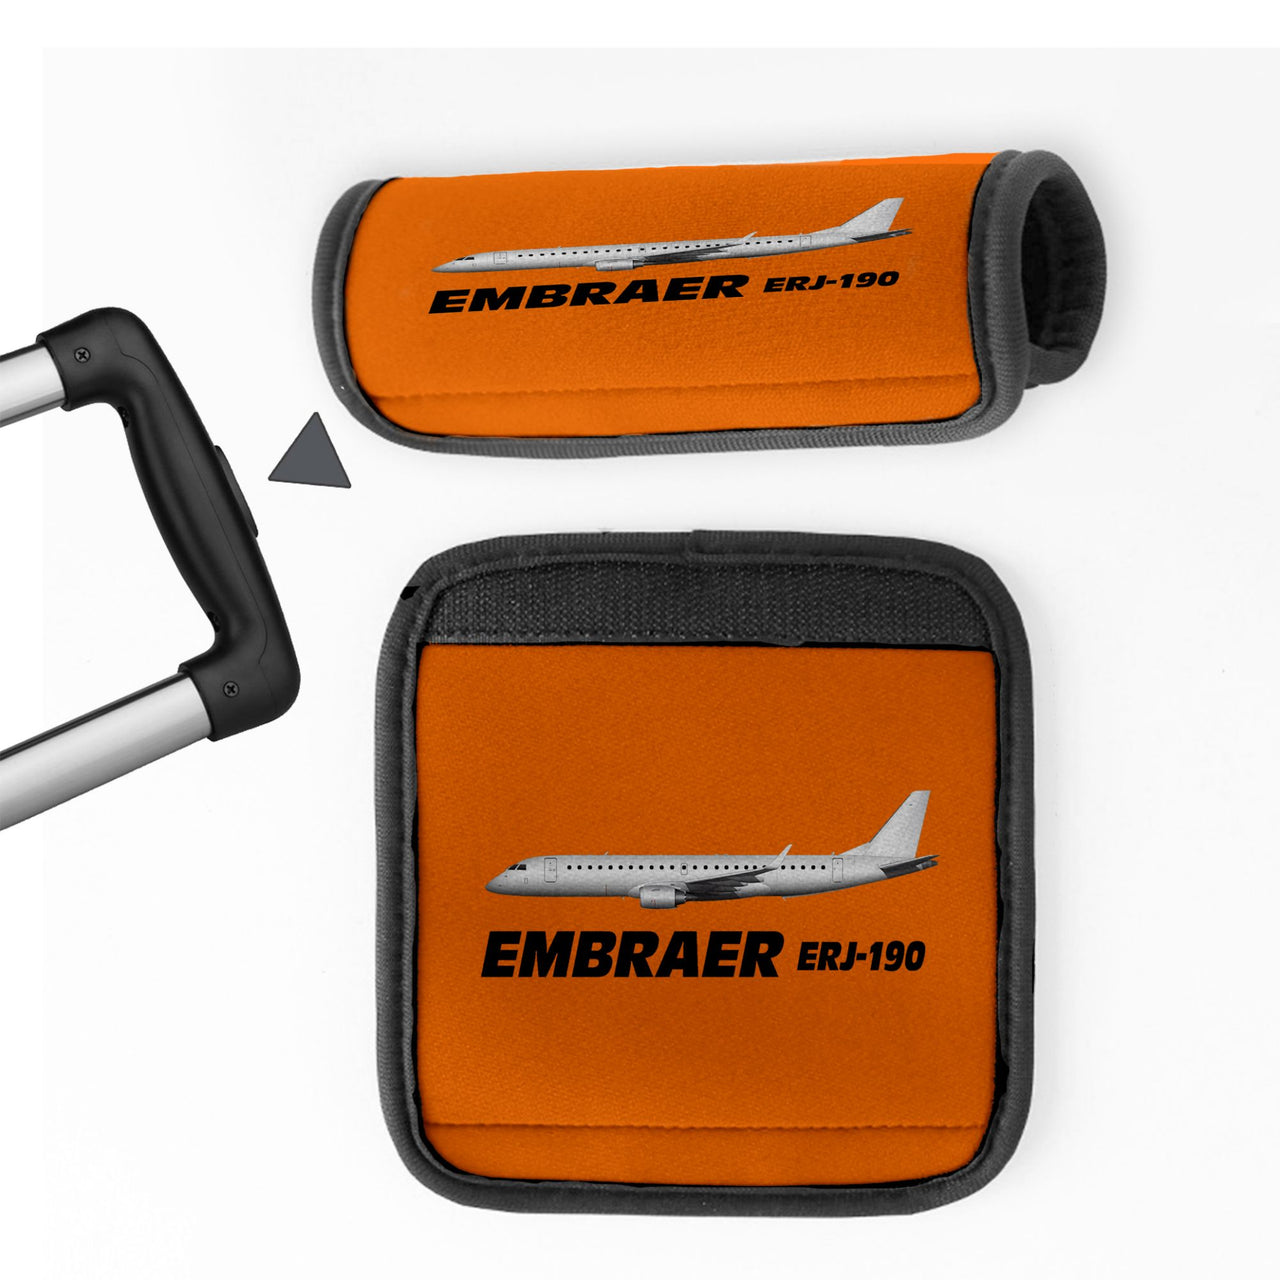 The Embraer ERJ-190 Designed Neoprene Luggage Handle Covers